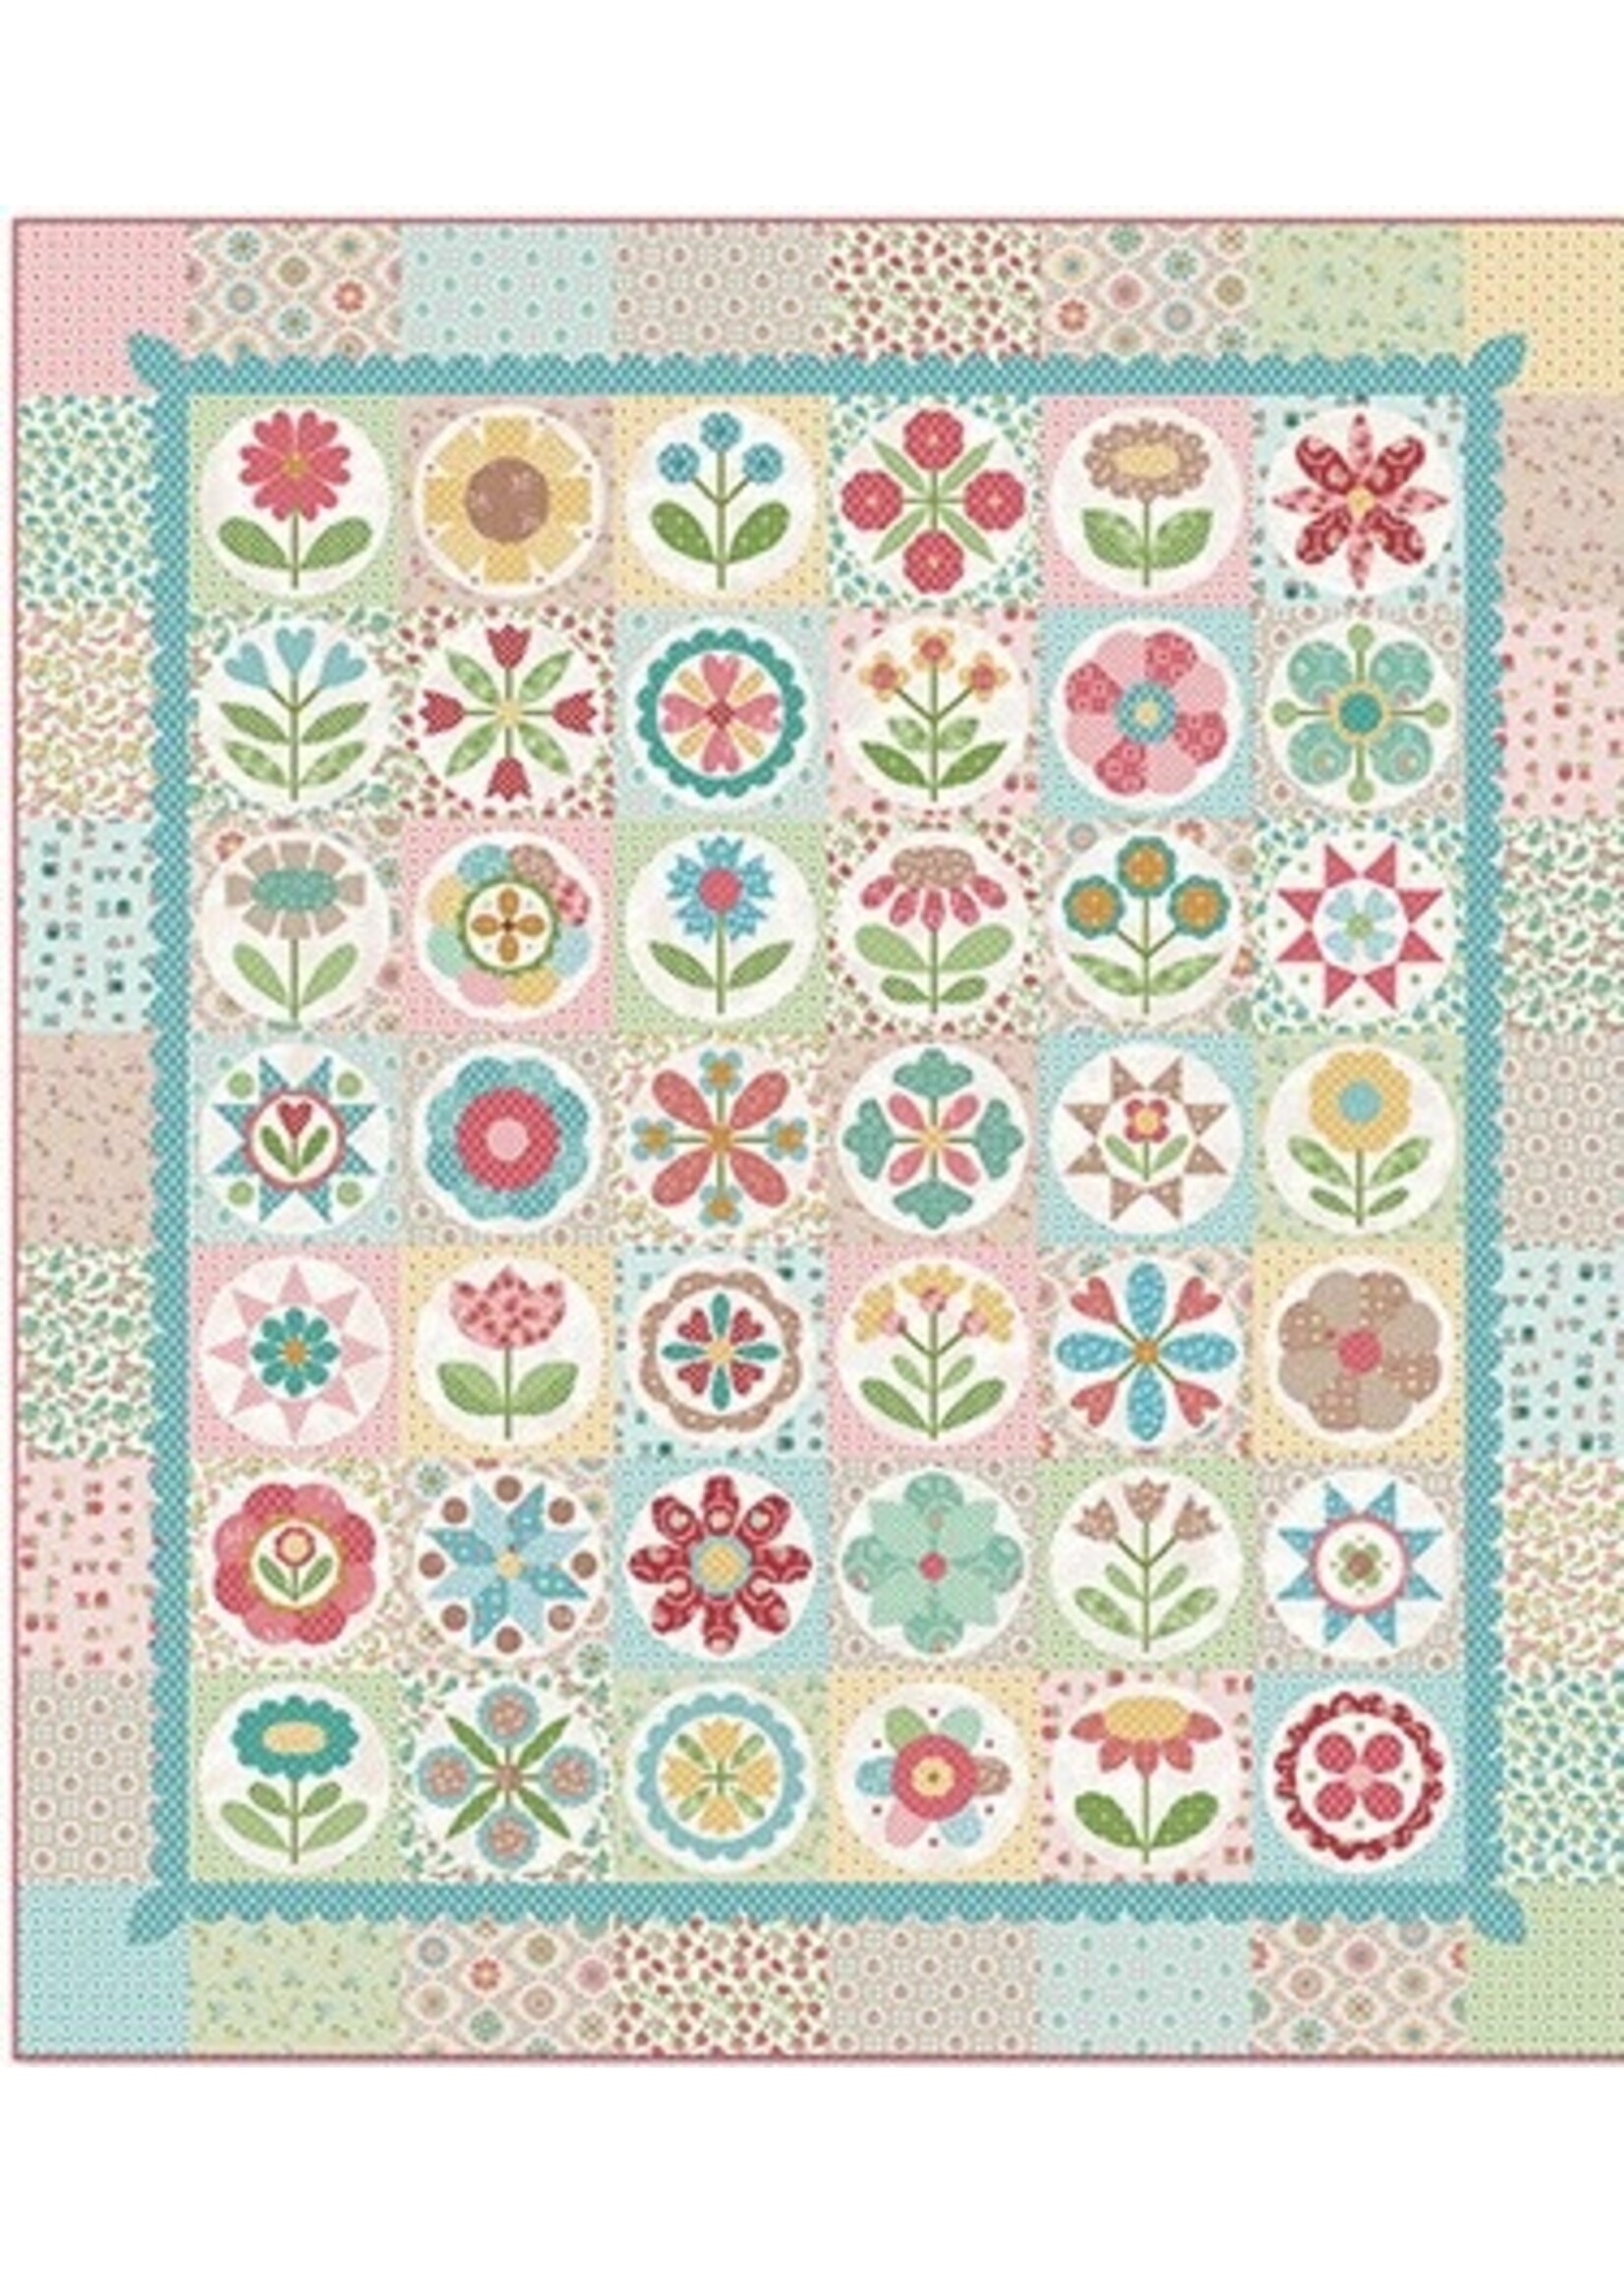 Riley Blake Designs Lori Holt - Templates - Granny's Garden - 32 stuks